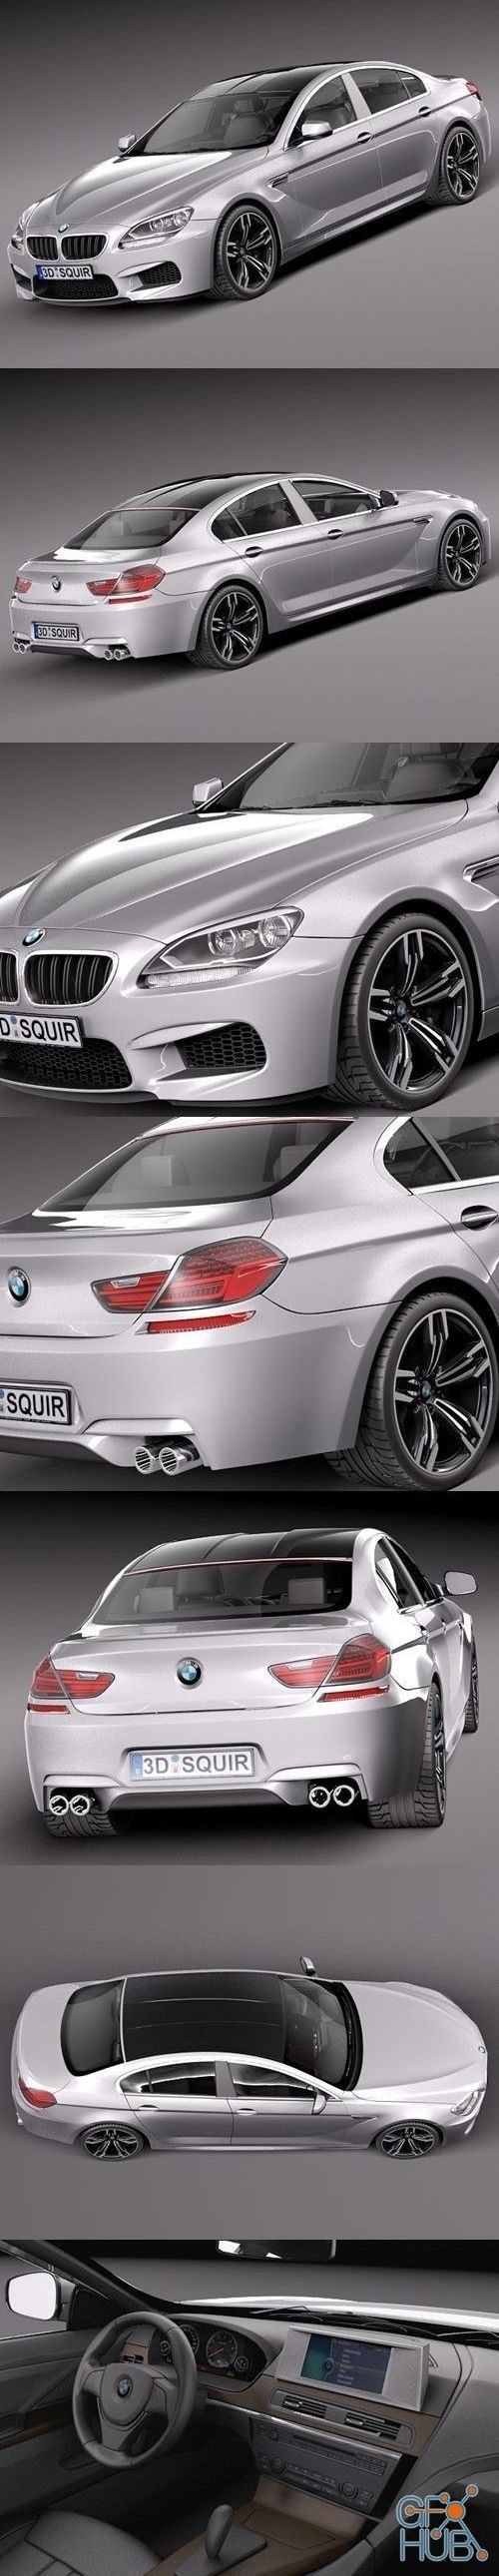 BMW M6 Gran Coupe 2014 car